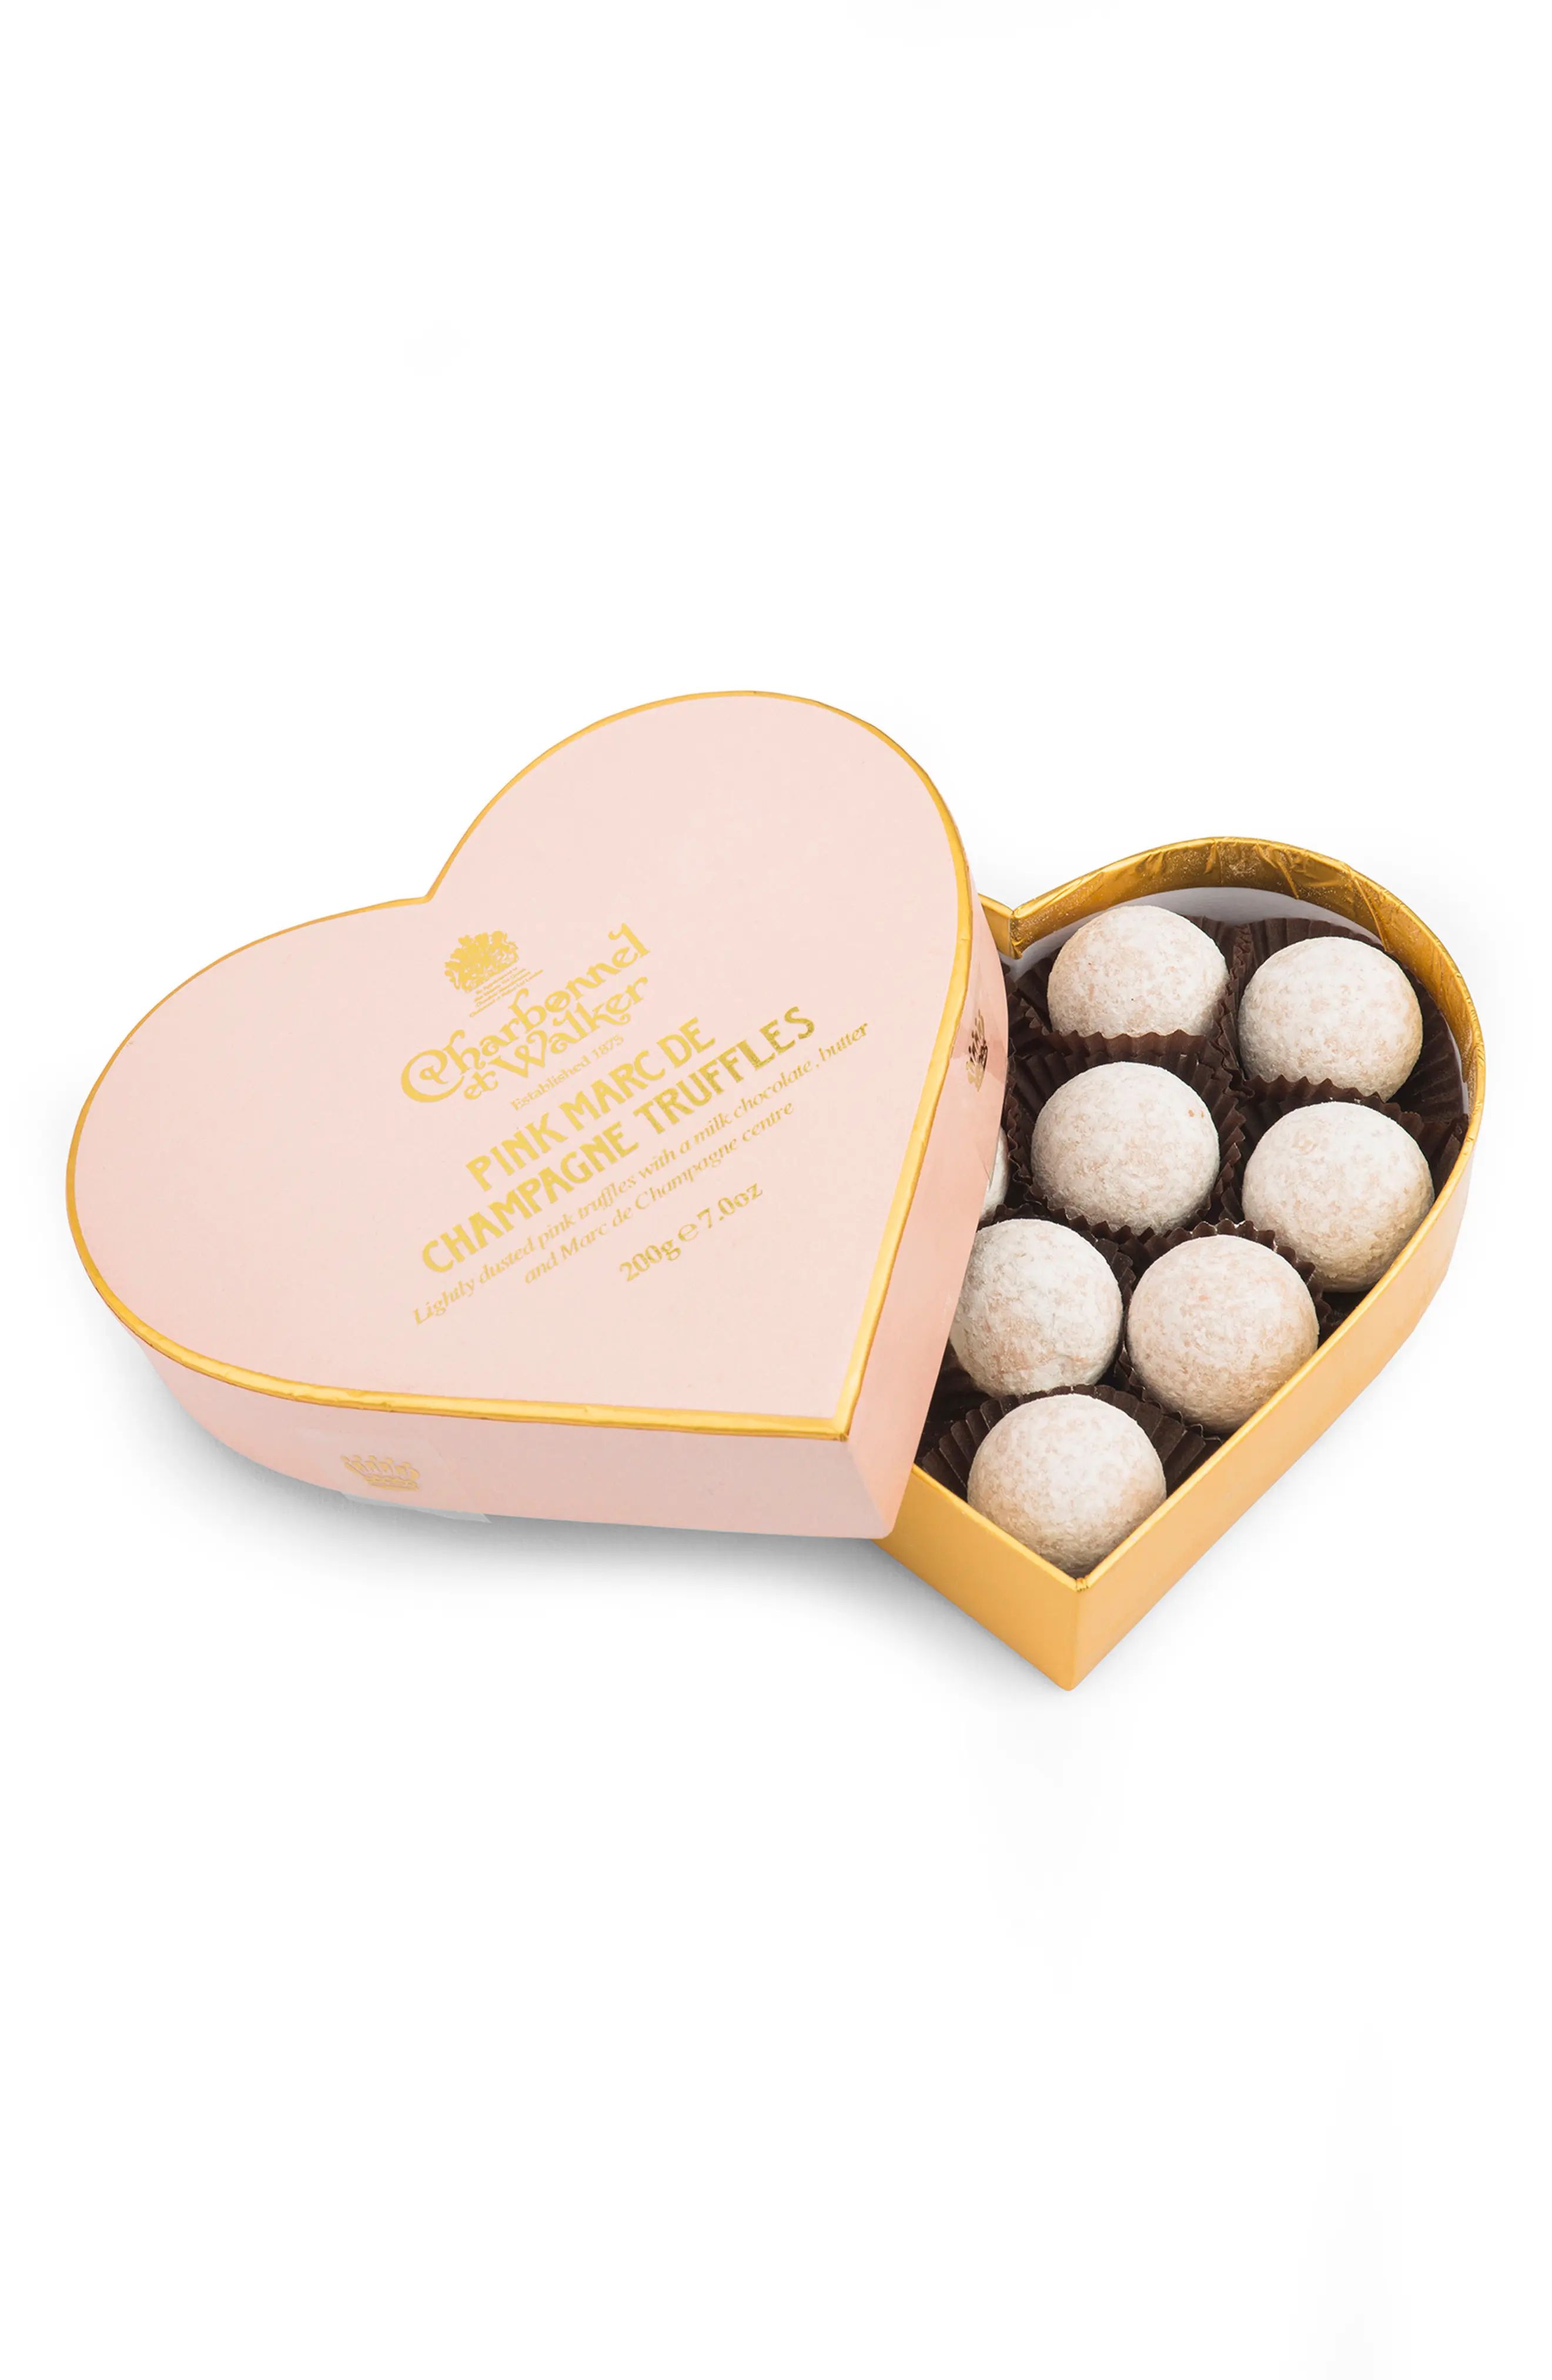 Charbonnel et Walker Chocolate Truffles in Heart Shaped Gift Box | Nordstrom